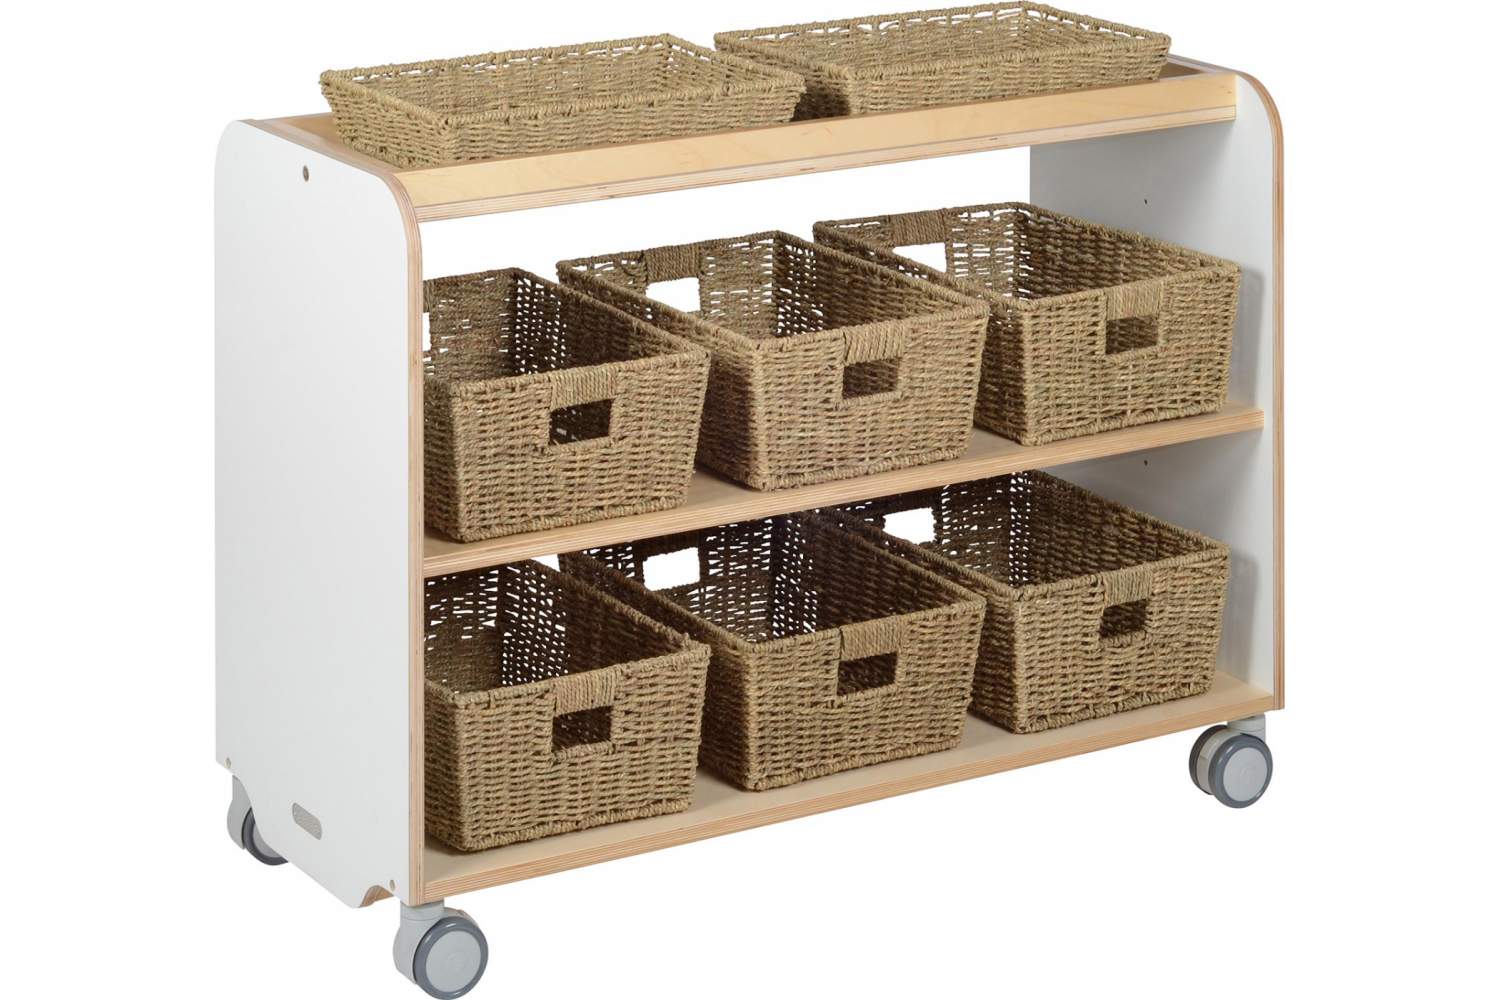 Storage unit for preschools